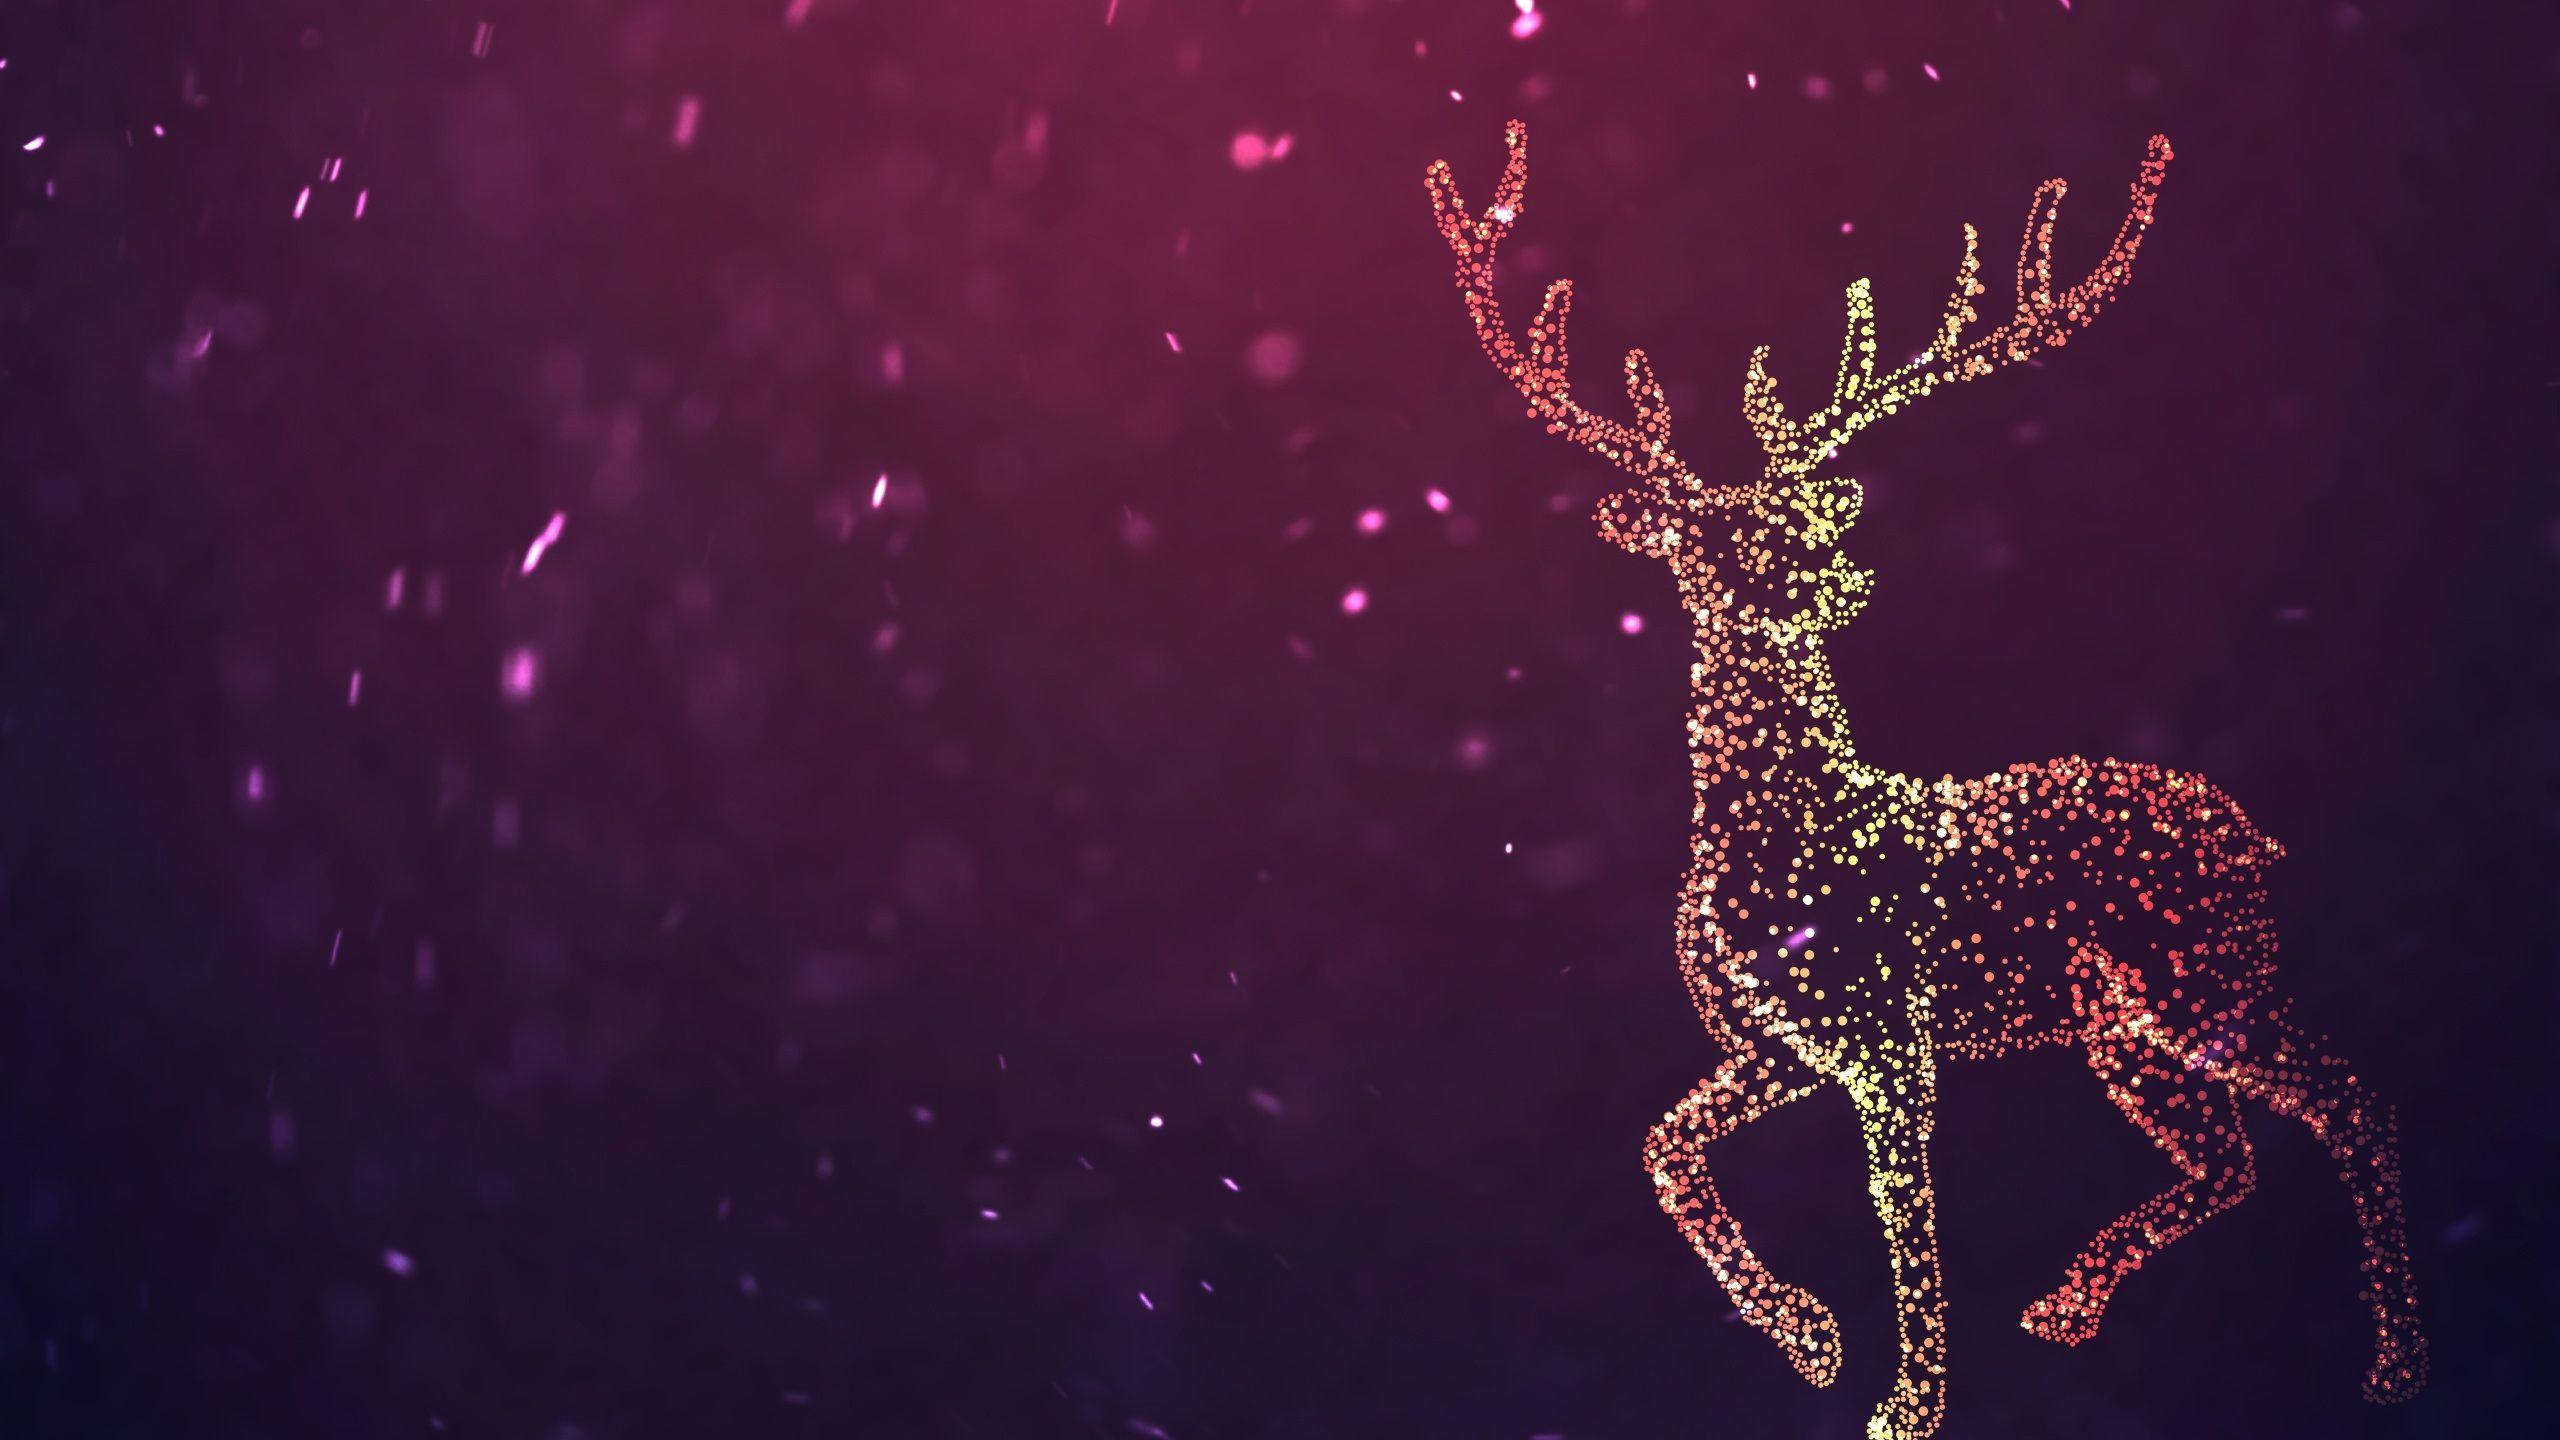 Beautiful Deer Wallpapers - Top Free Beautiful Deer Backgrounds ...